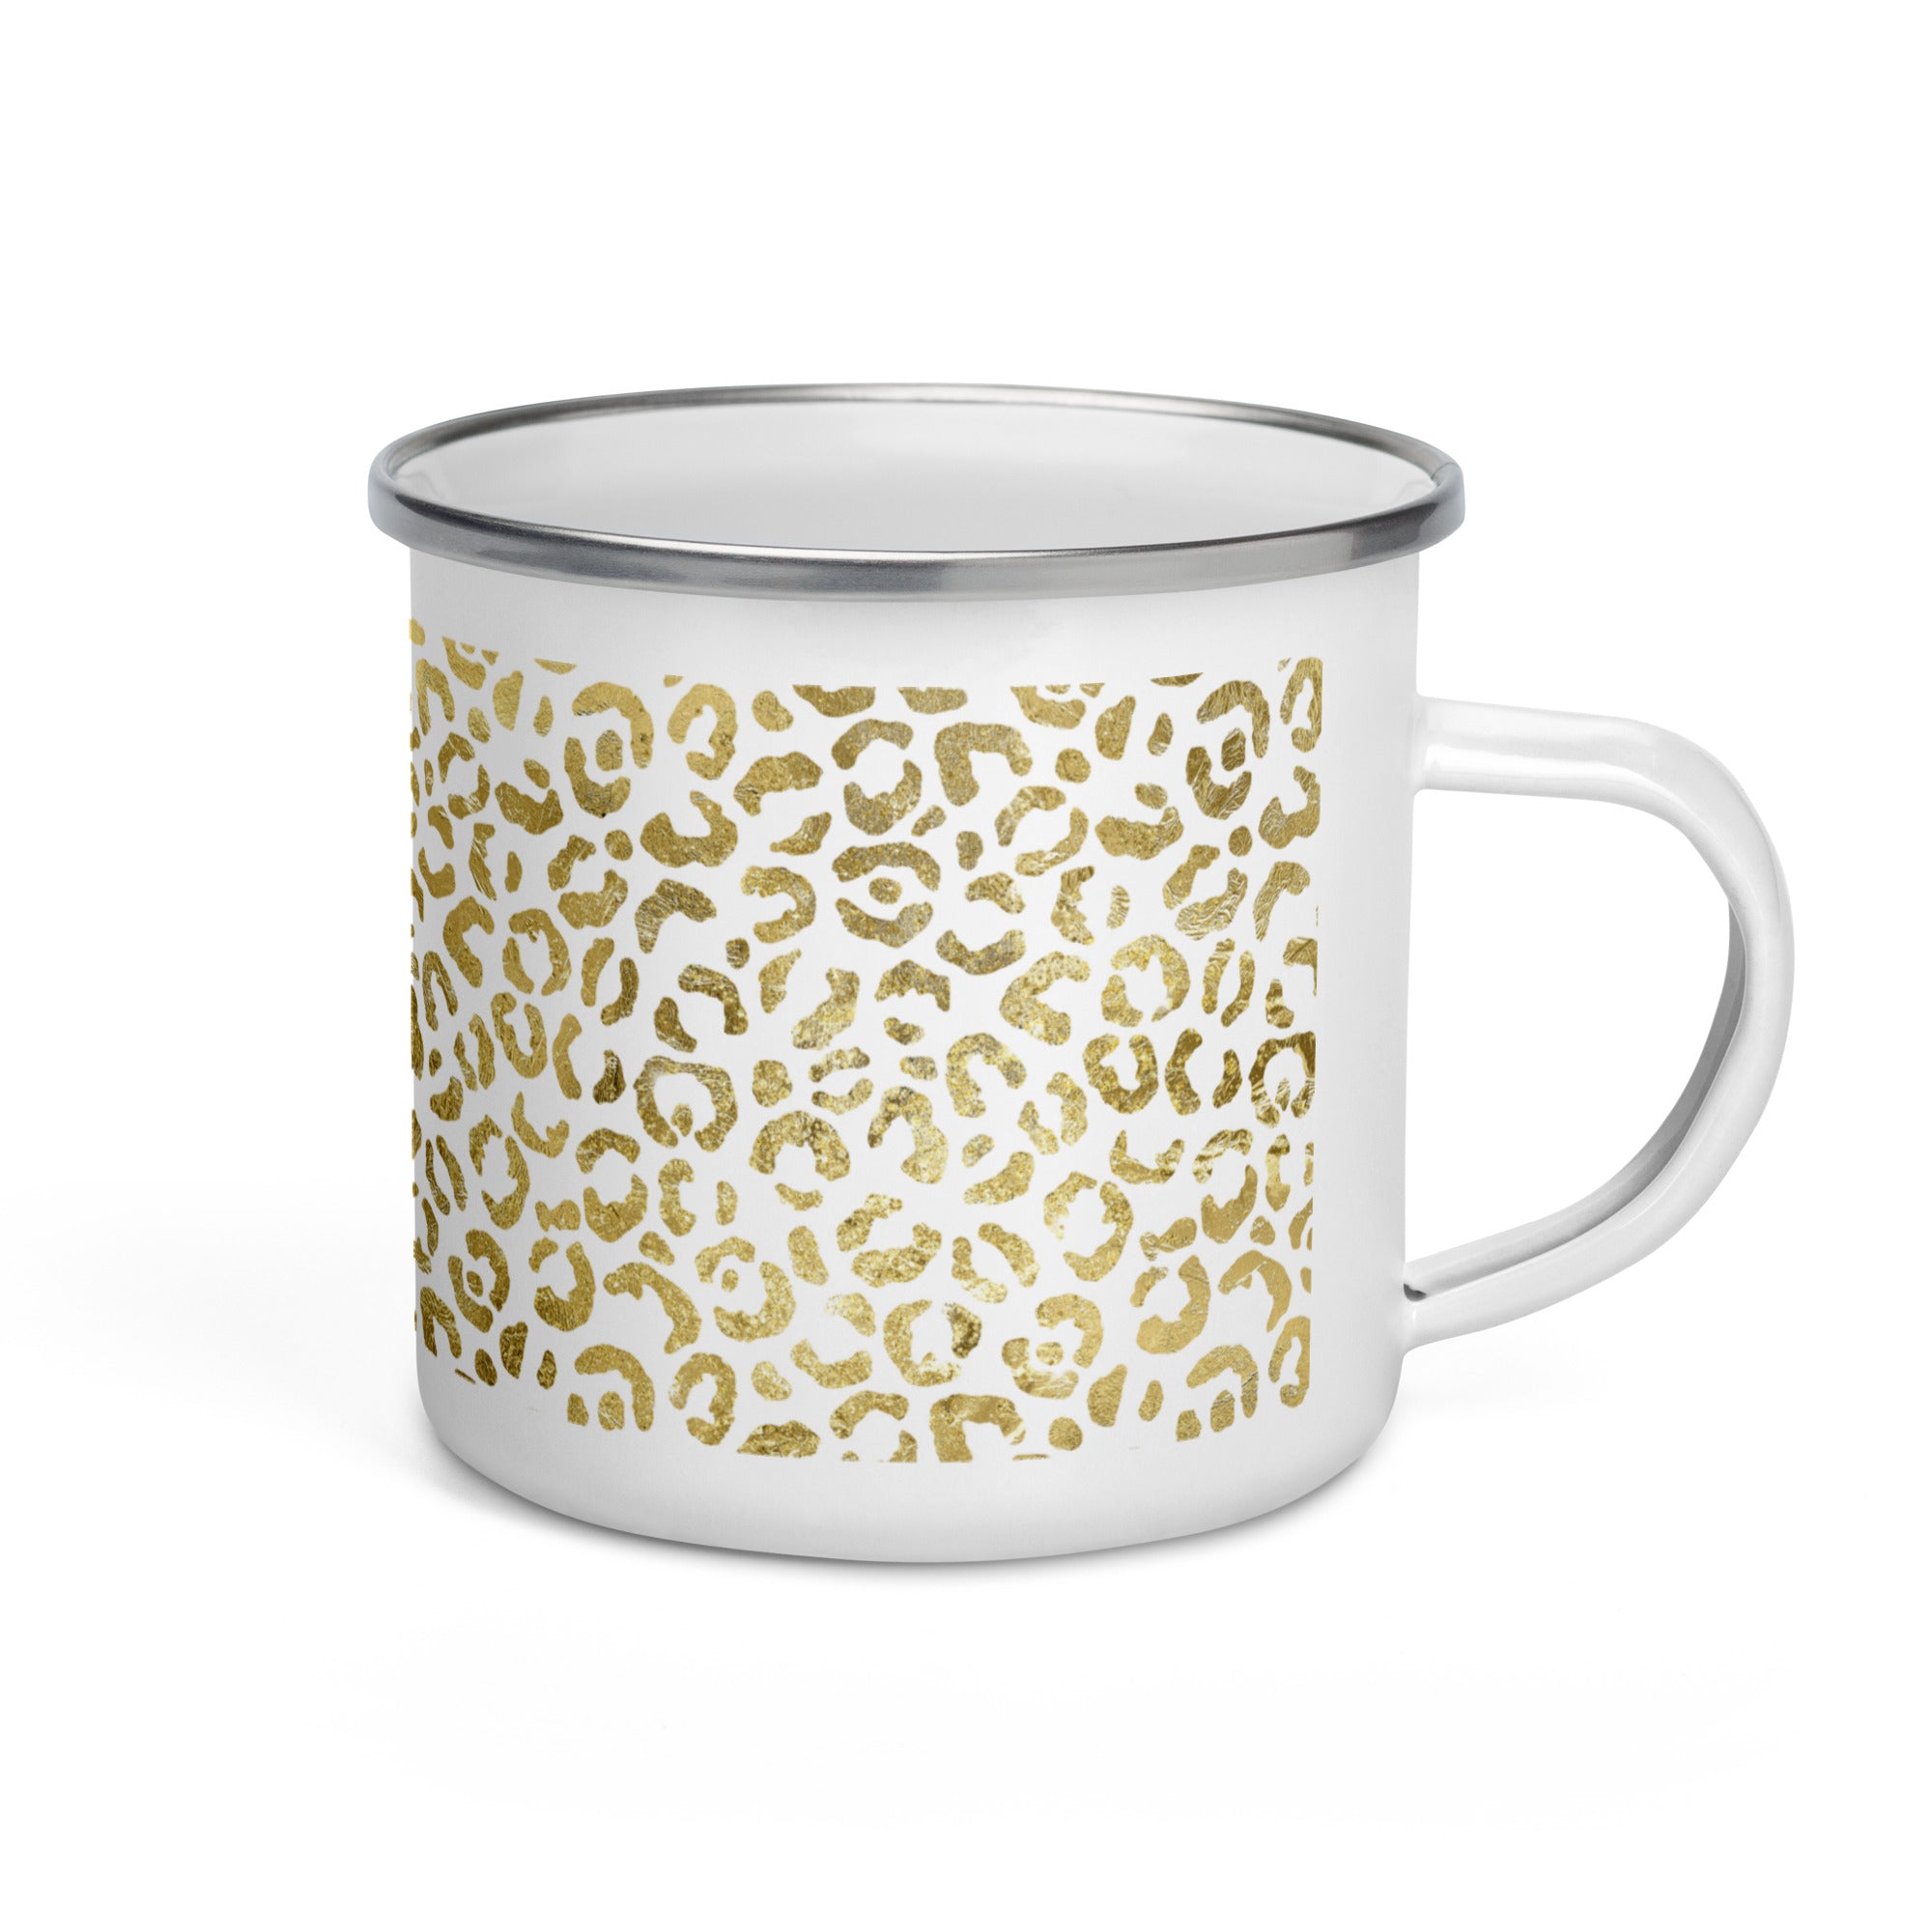 Enamel Mug- Golden Leopard Print